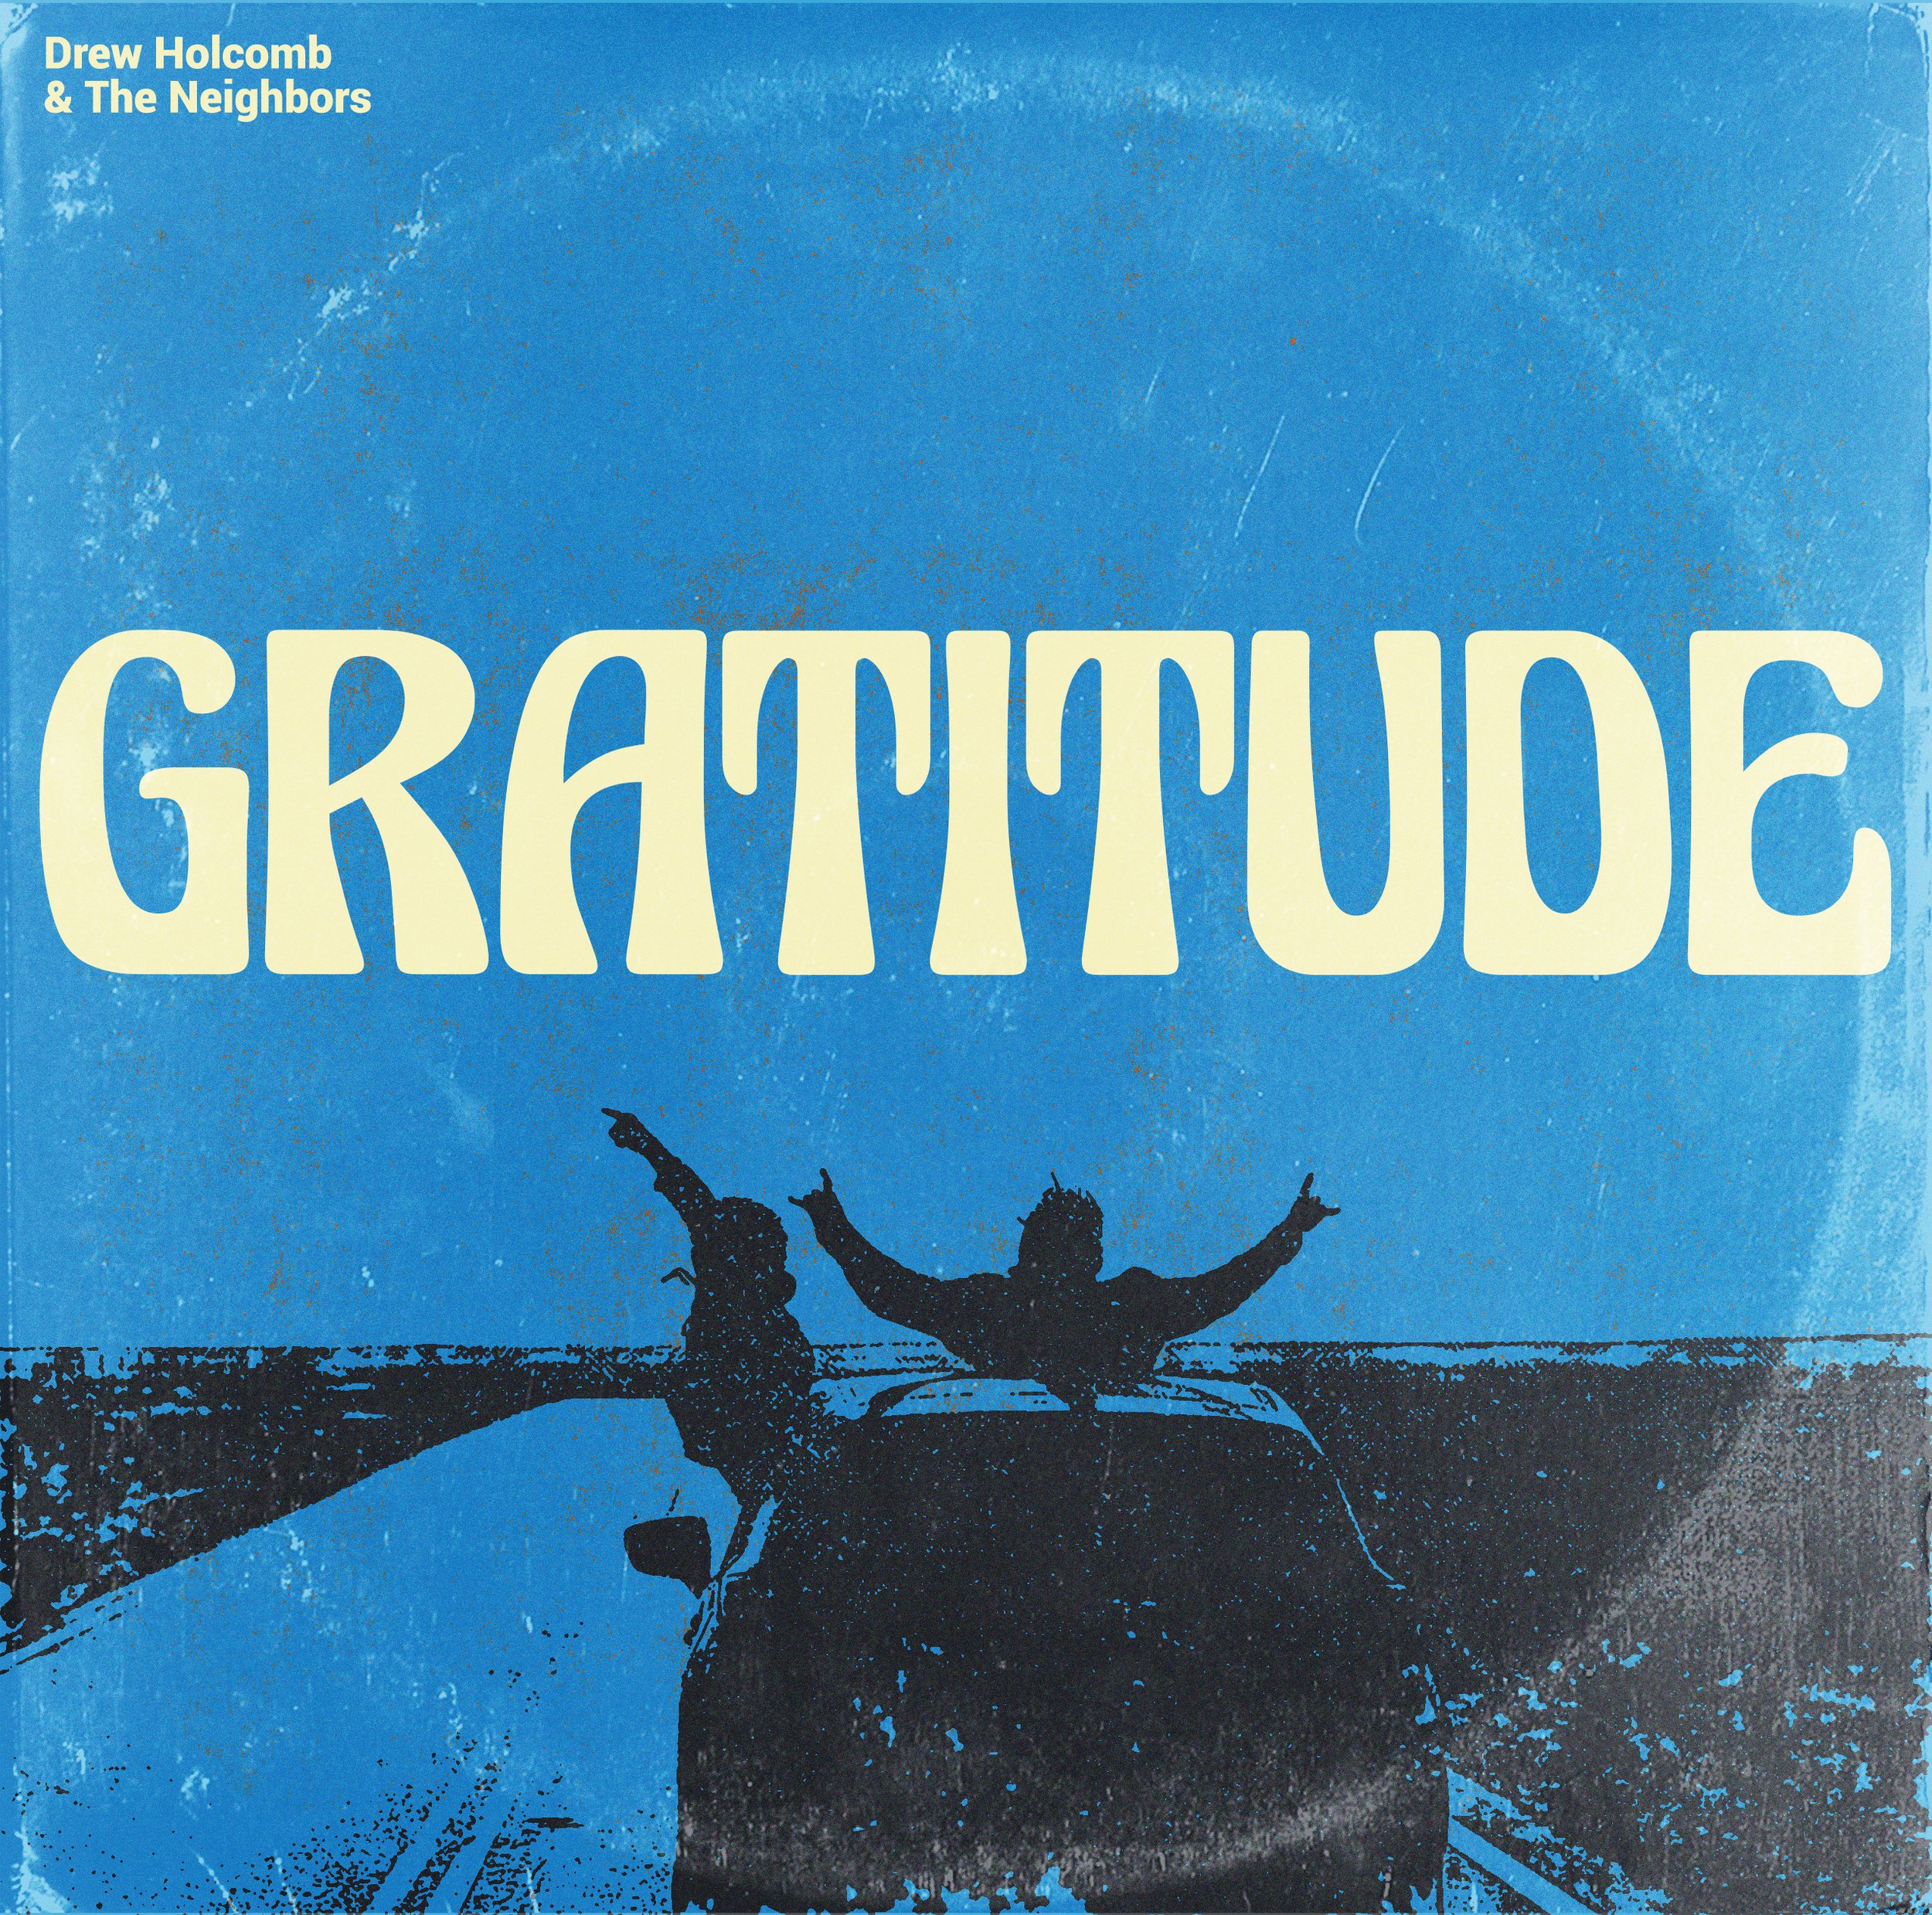 Drew Holcomb &amp; The Neighbors - "Gratitude" - Single